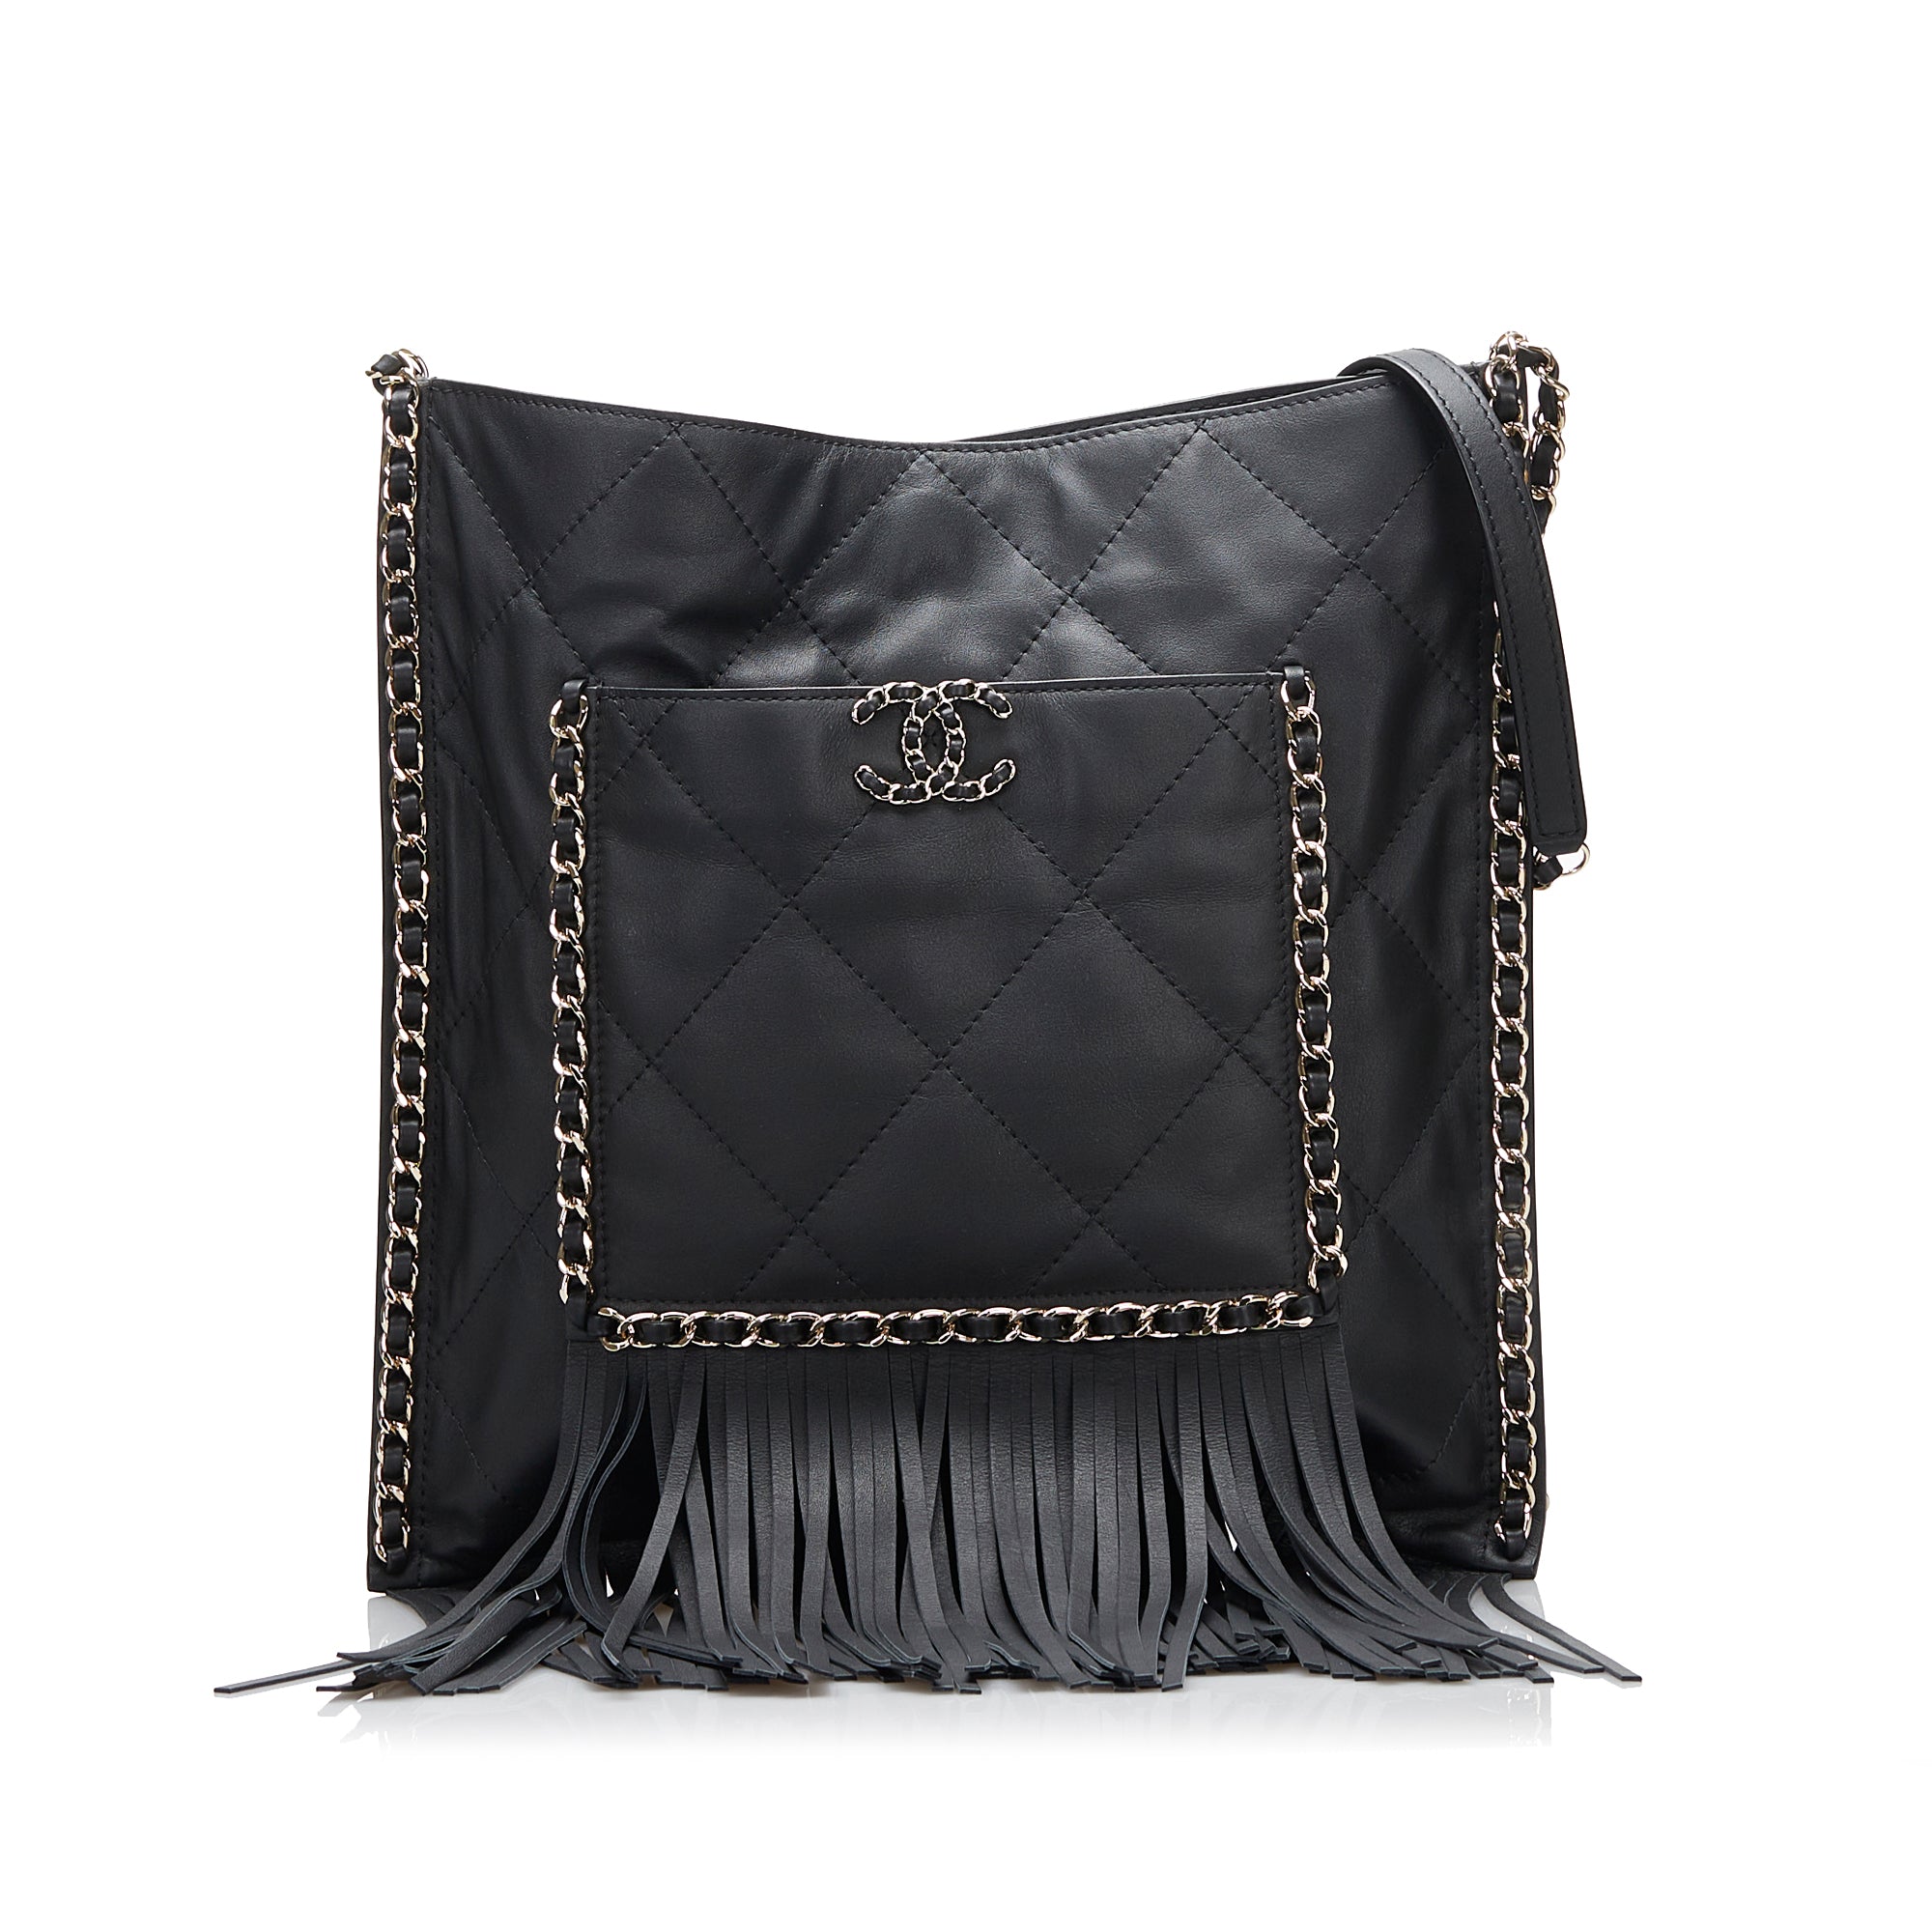 Tan Chanel CC Wild Stitch Handbag